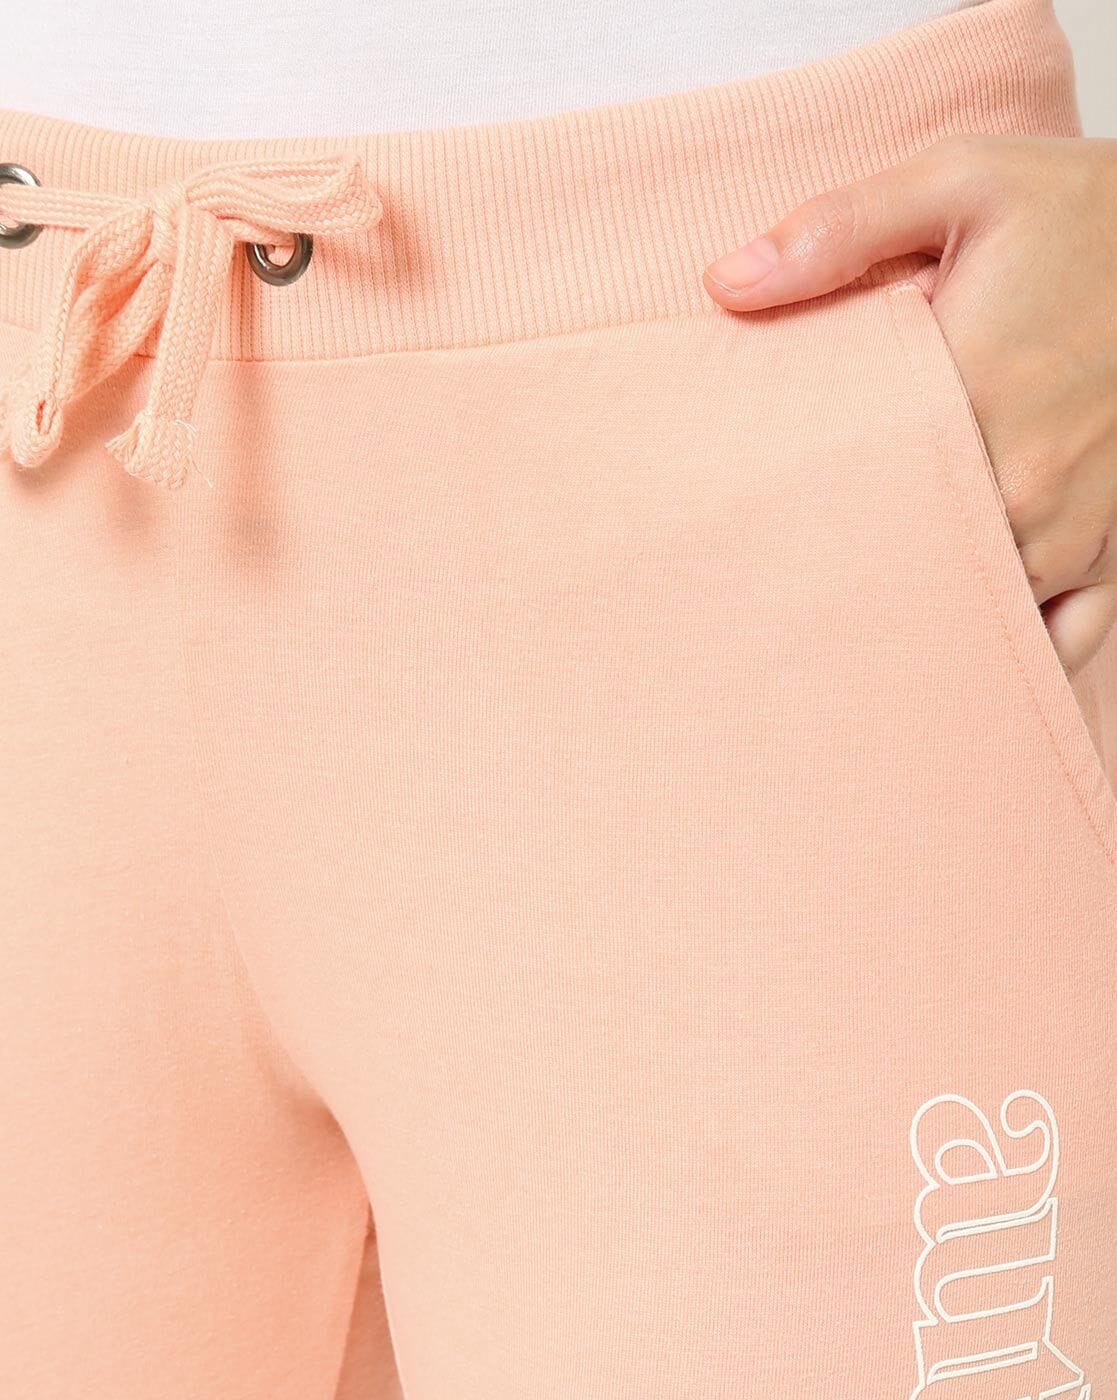 Buy Peach Track Pants for Women by Teamspirit Online